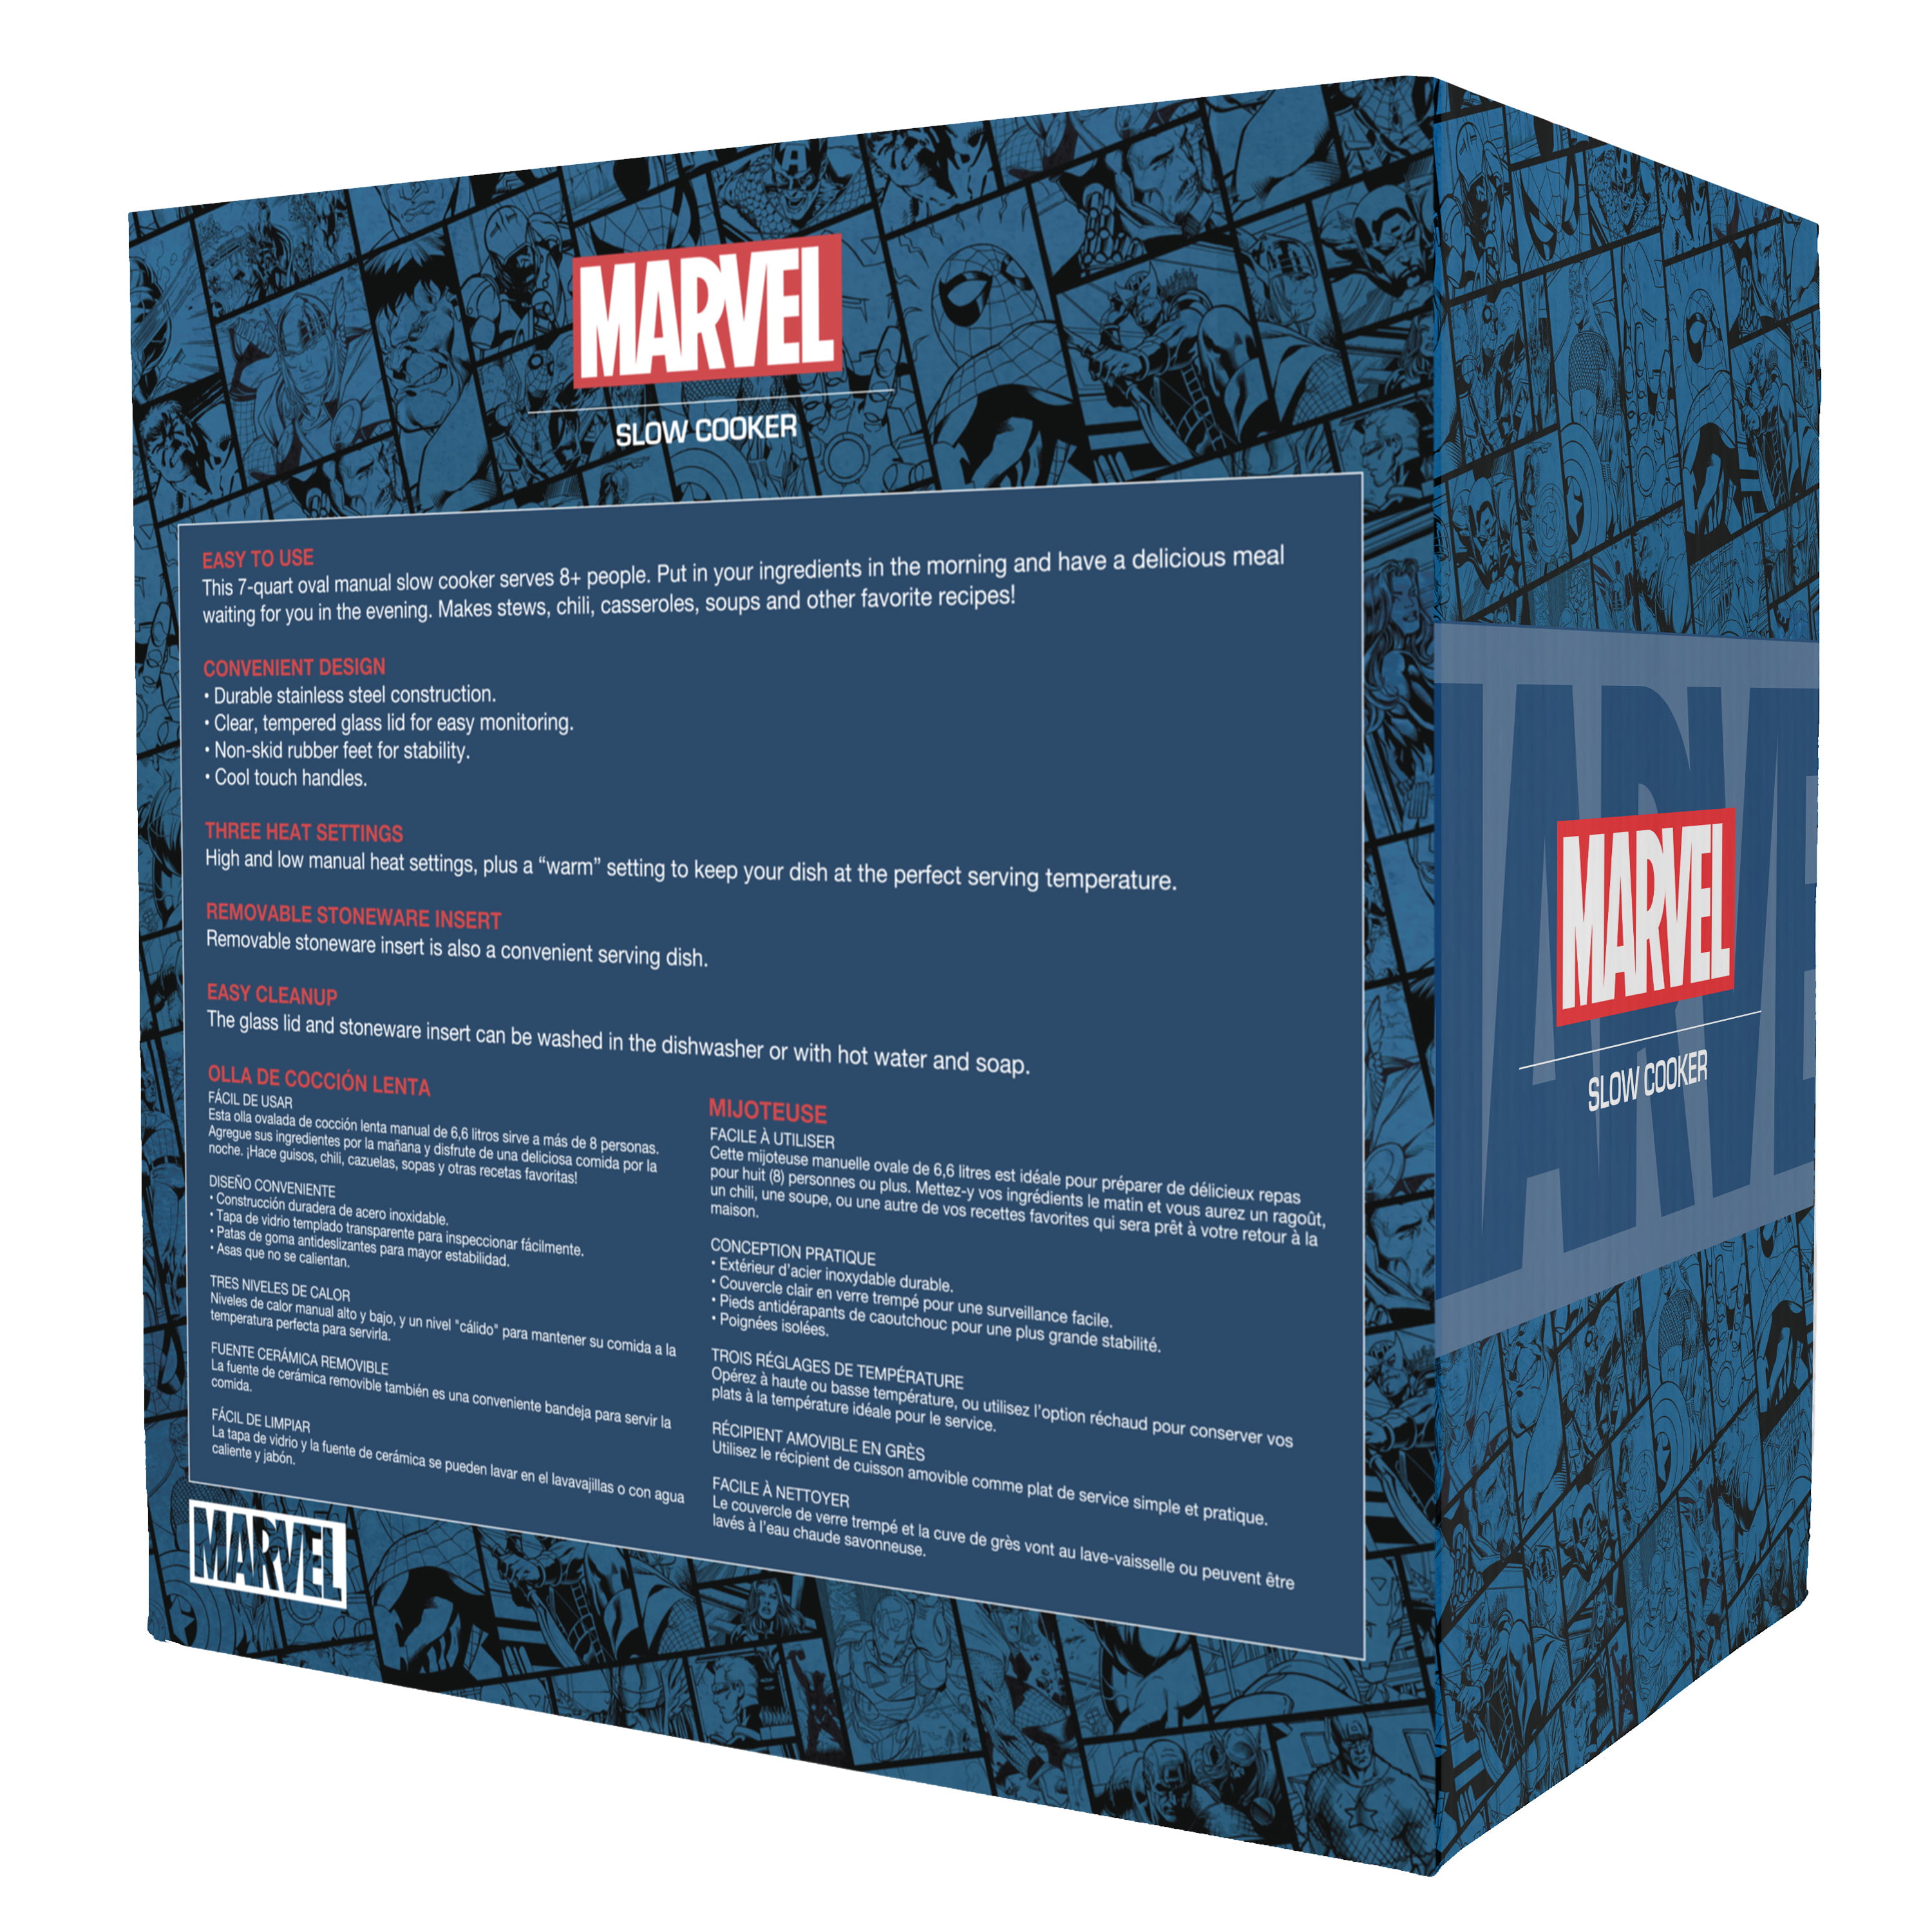 Marvel Avengers Kawaii 2-Qt Slow Cooker